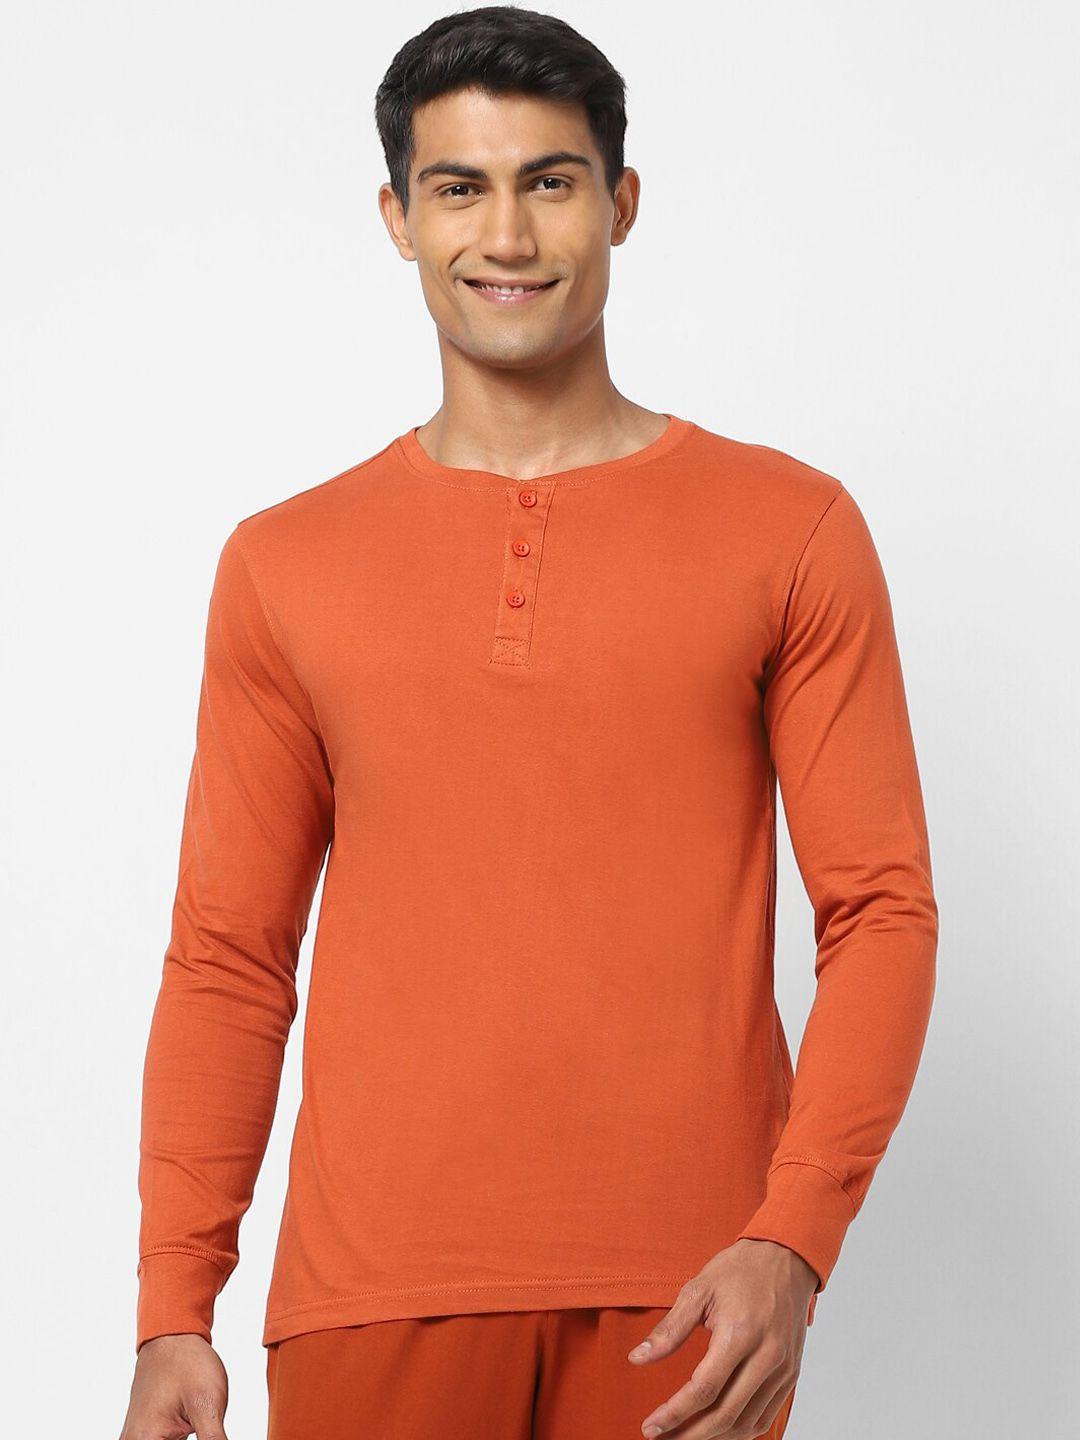 ajile-by-pantaloons-men-rust-orange-solid-cotton-lounge-tshirts